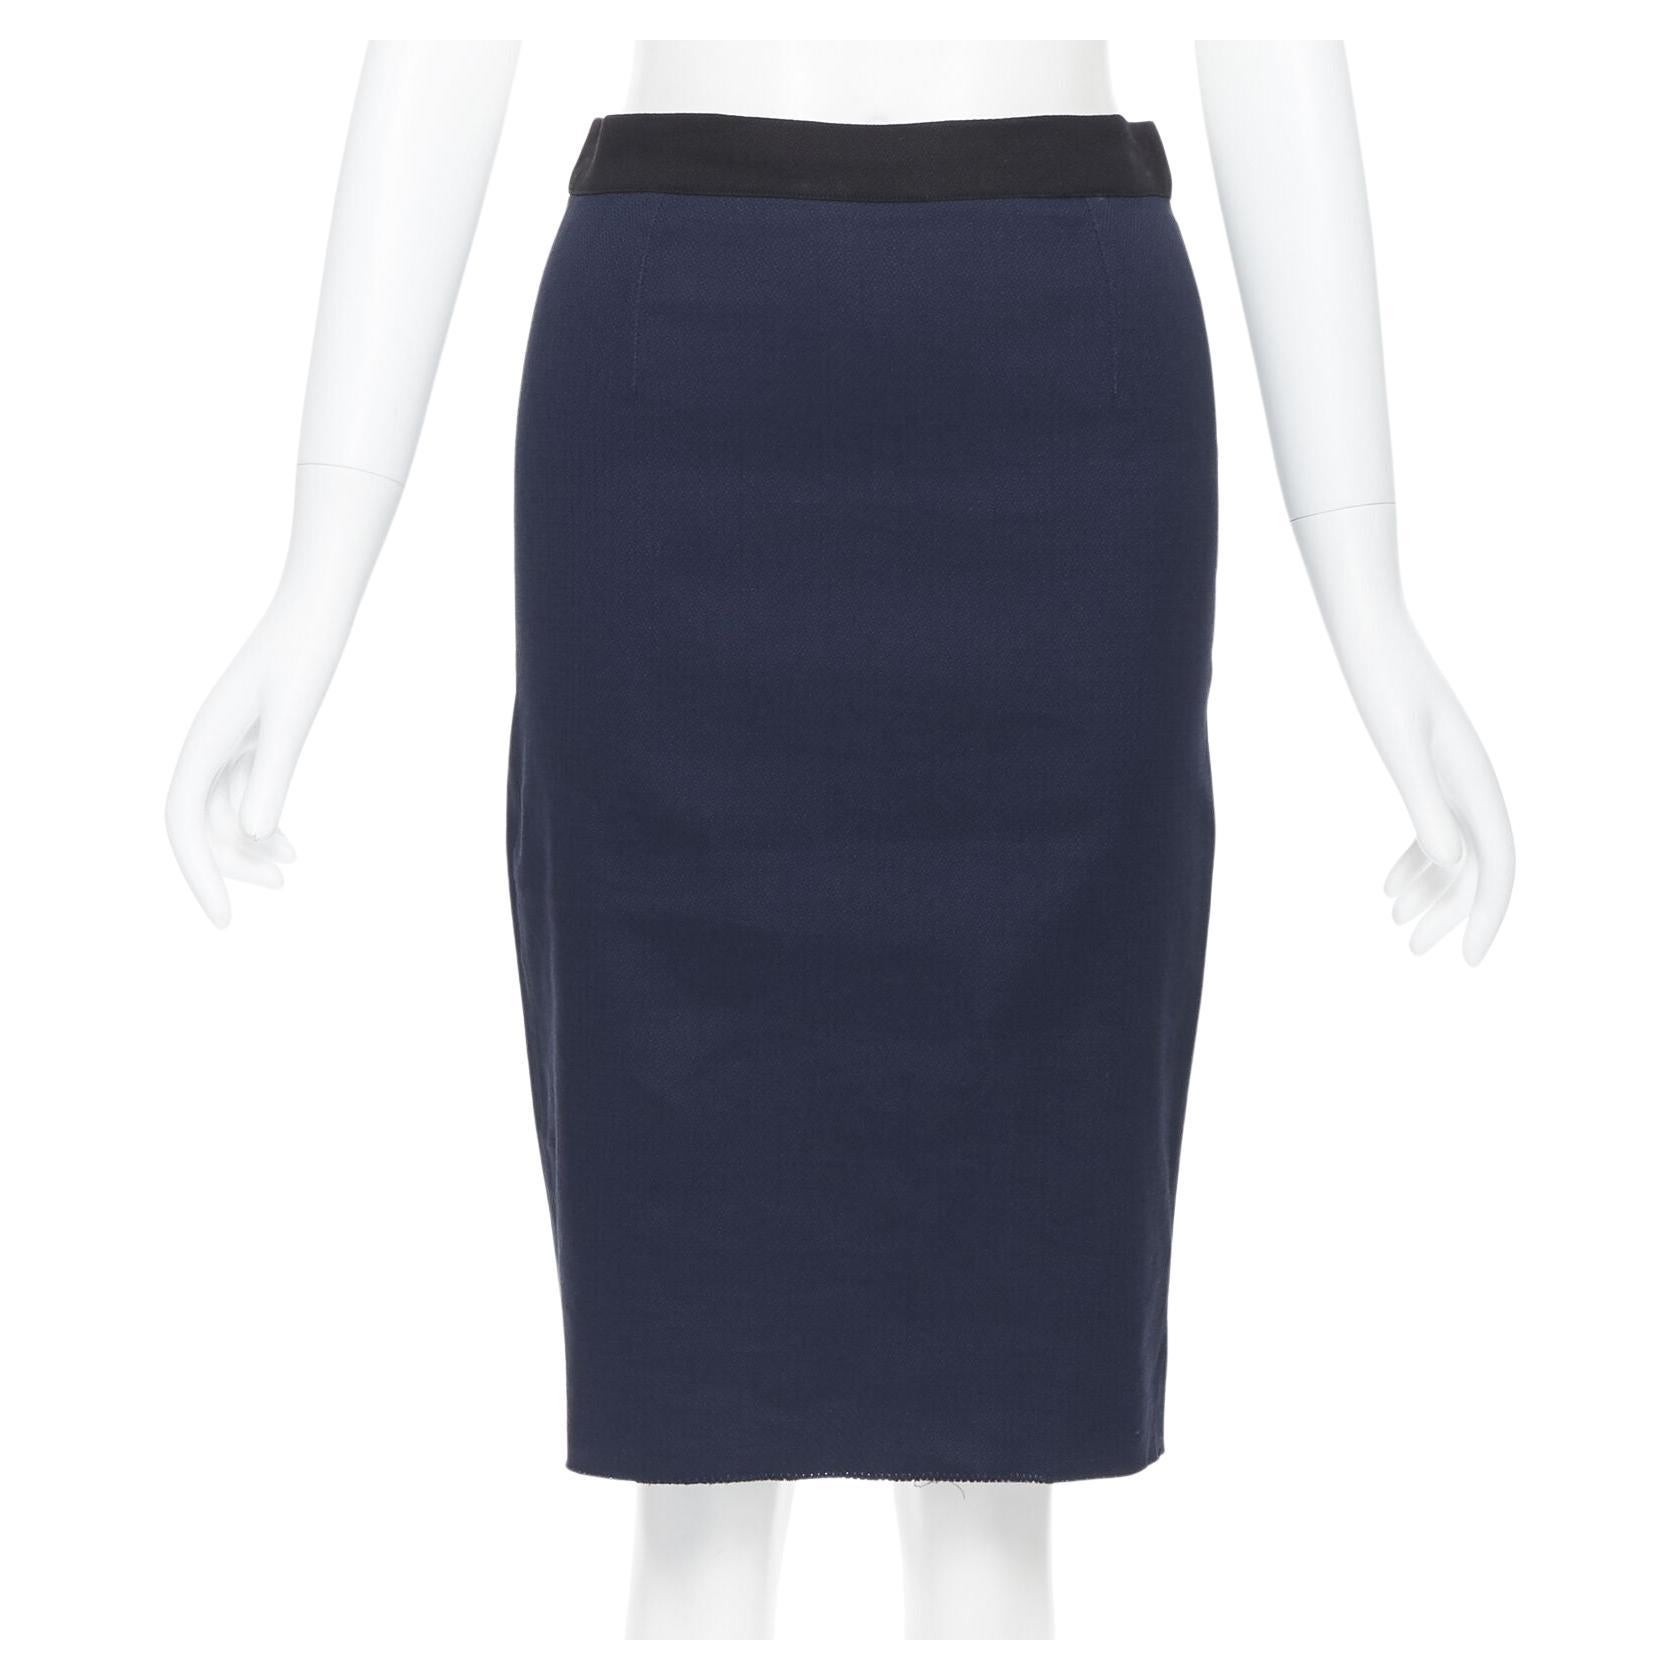 LANVIN ALBER ELBAZ 2014 navy blue linen blend exposed zip pencil skirt FR34 26" For Sale